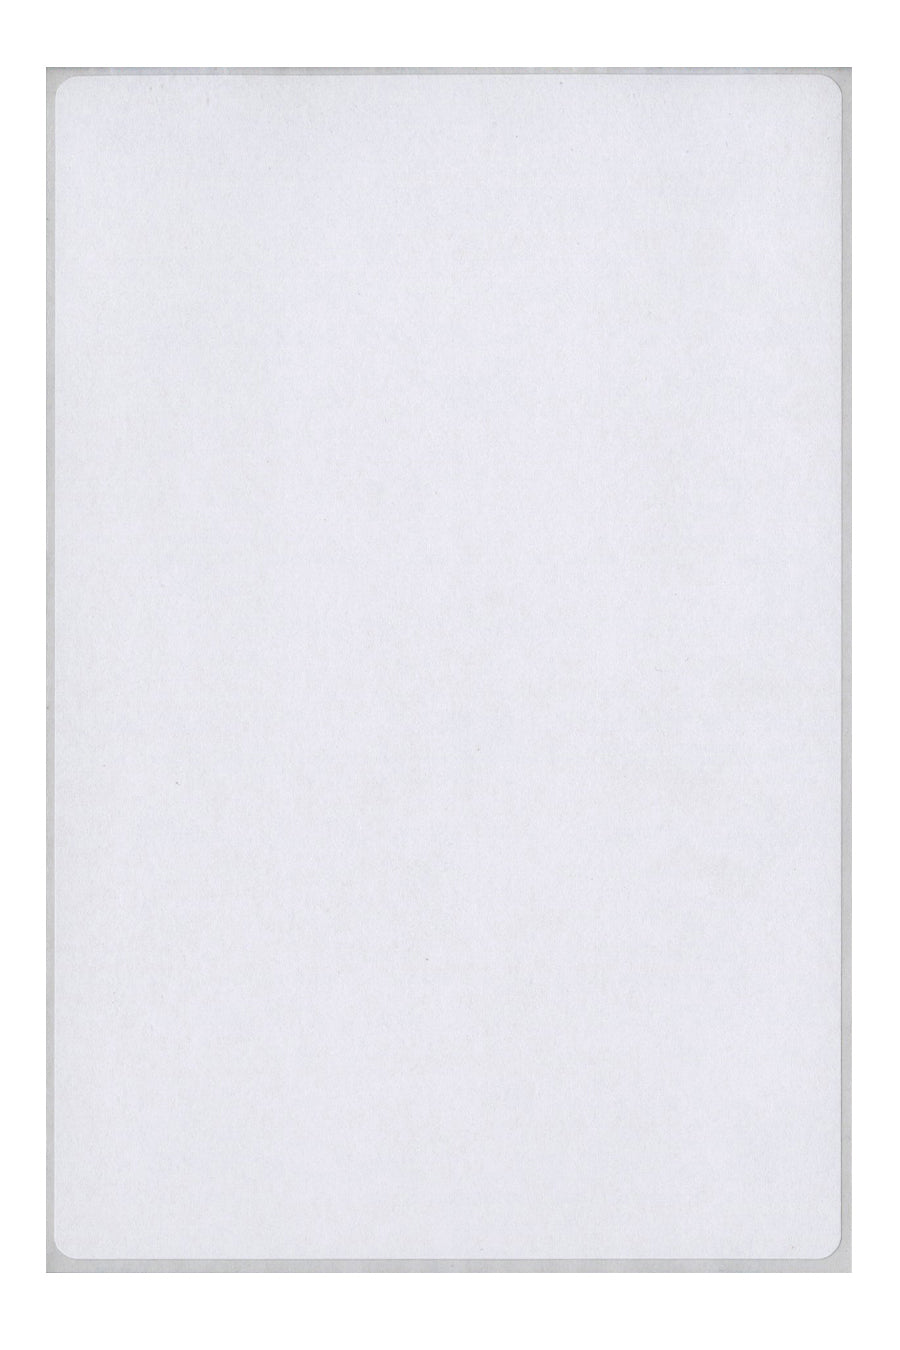 White Multi-Purpose Labels, 4" x 6", Rectangle, 40/Bx